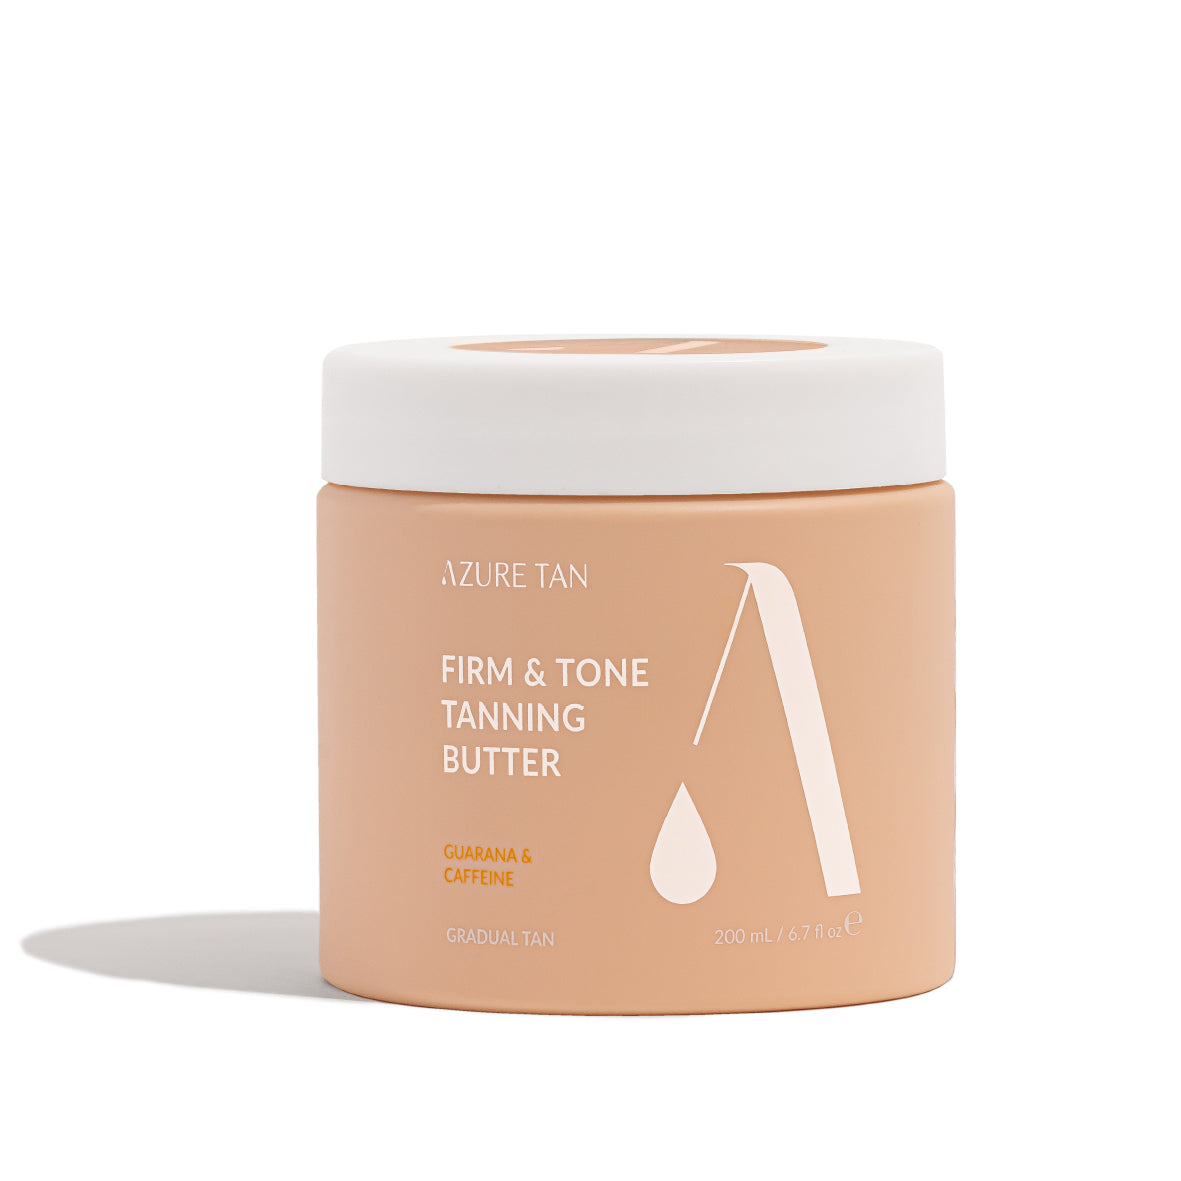 Azure Tan Firm & Tone Tanning Butter Gradual Tan 200ml